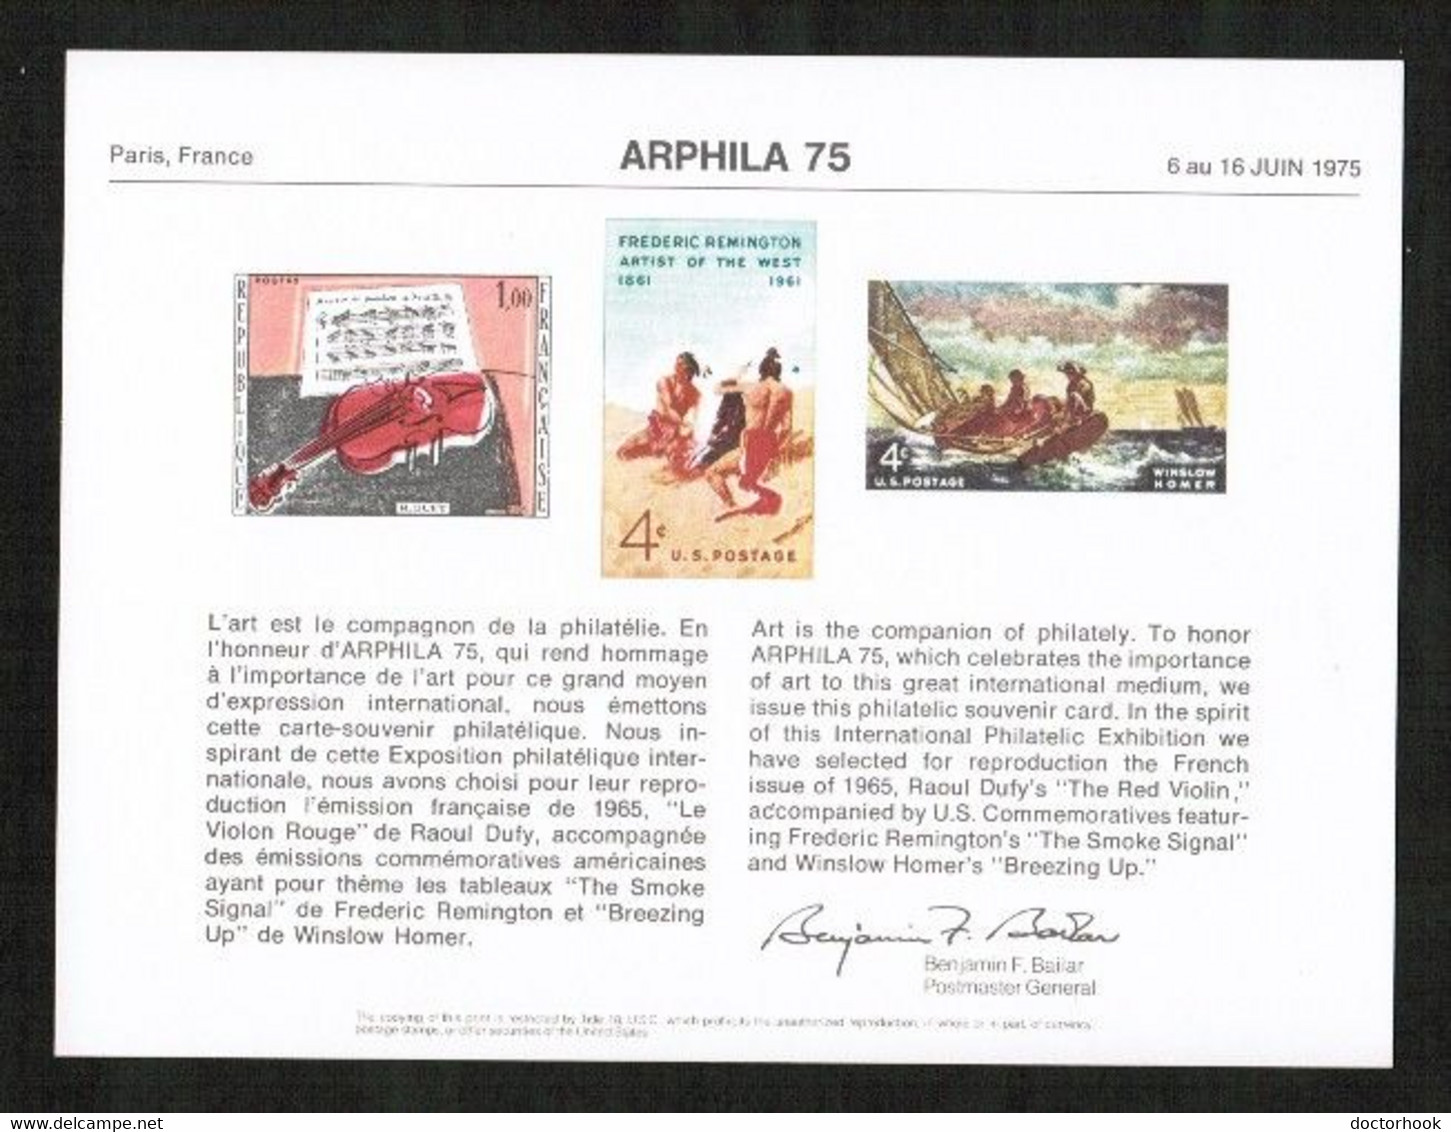 U.S.A.   ARPHILA '75 B.E.P. CARD UNUSED (FF-79) - Souvenirs & Special Cards